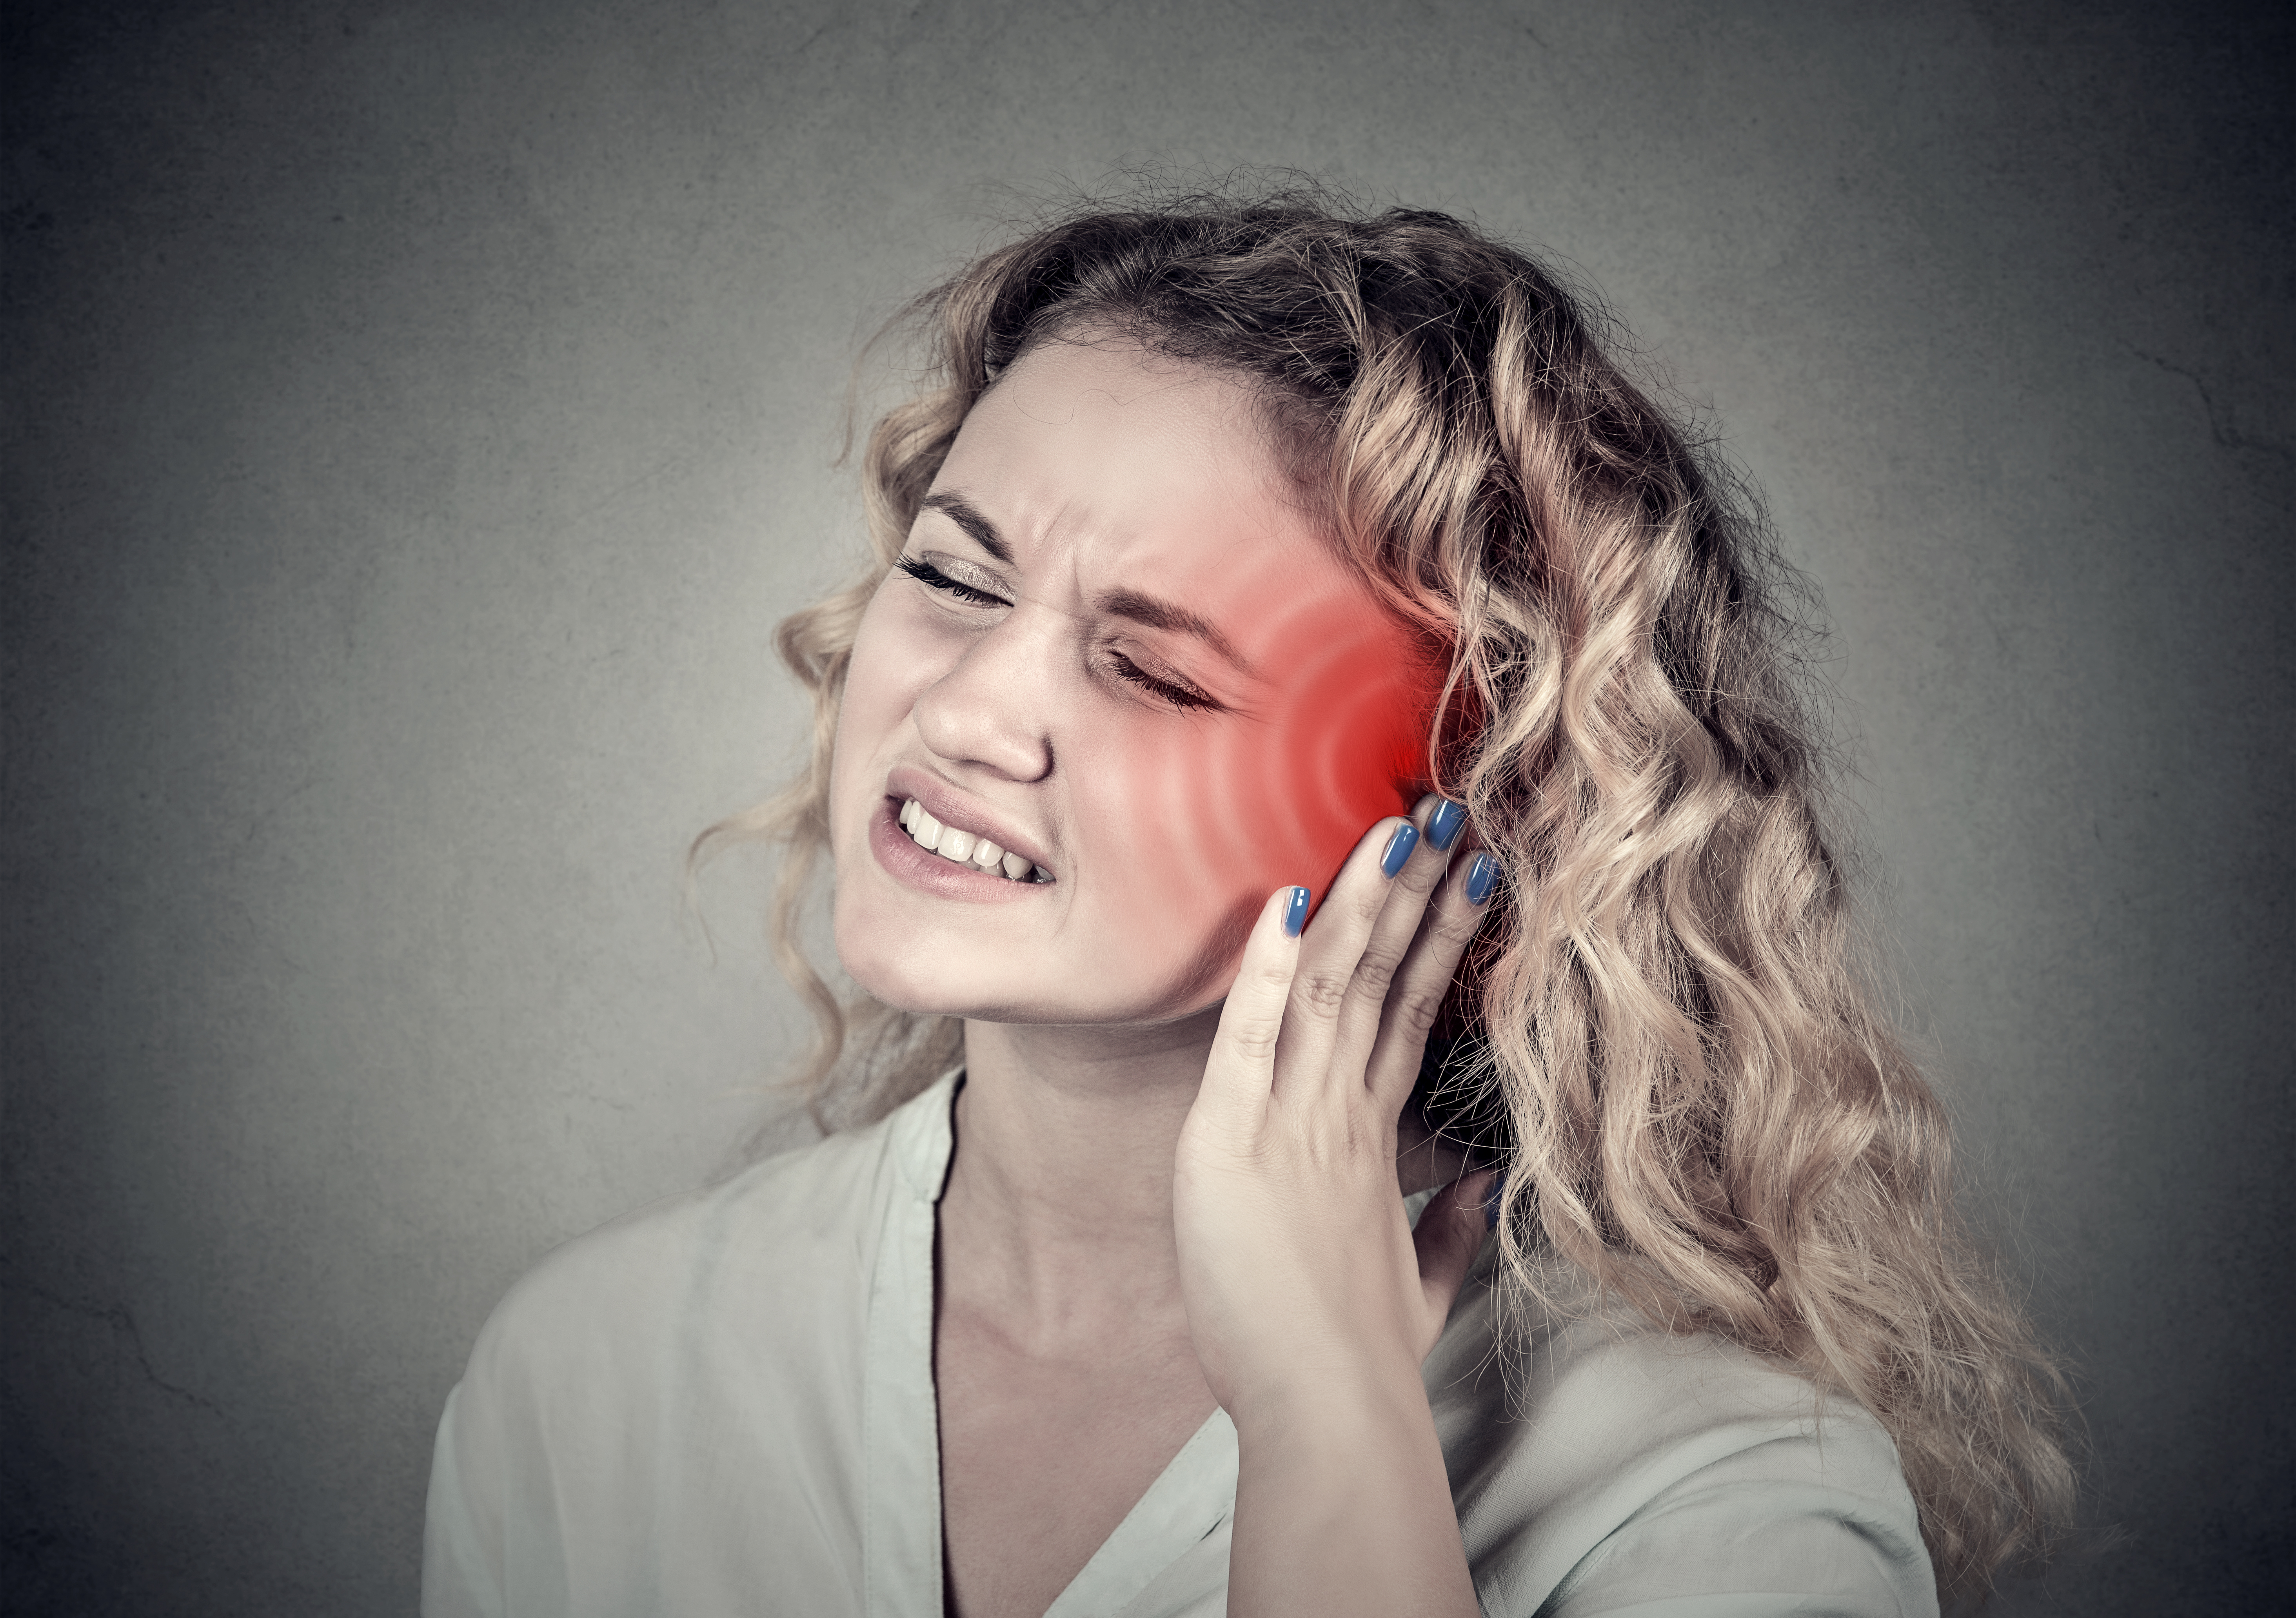 Can Nasal Polyps Cause Ear Pain?